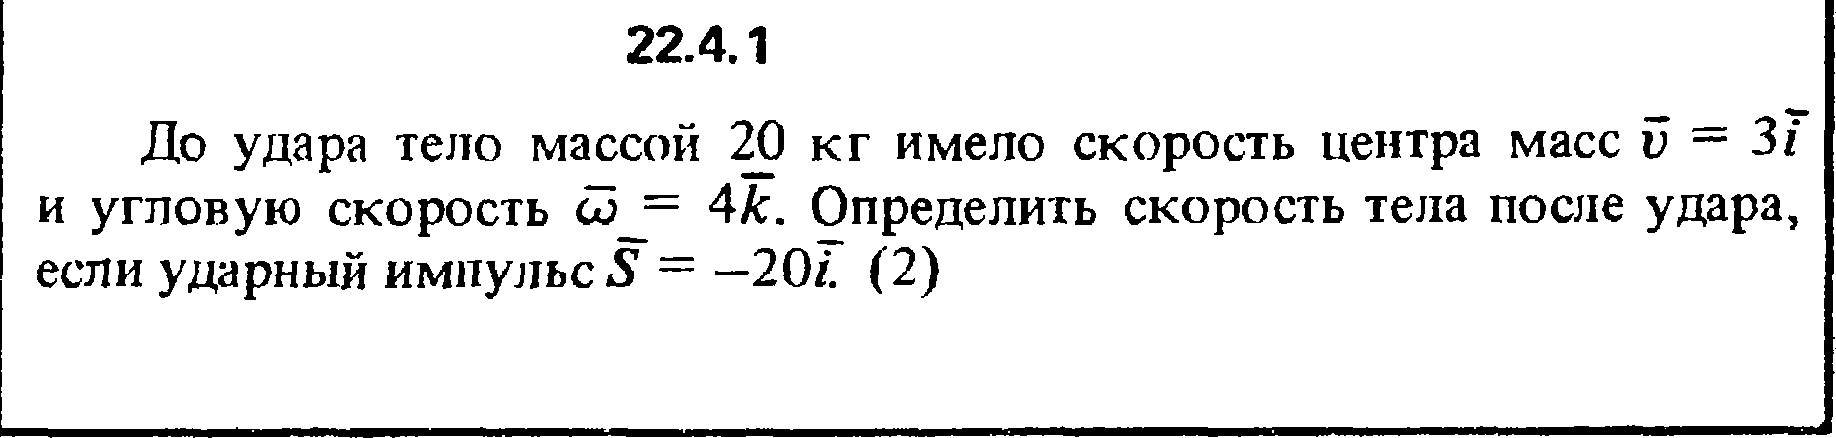 Решение 22.4.1 из сборника (решебника) Кепе О.Е. 1989